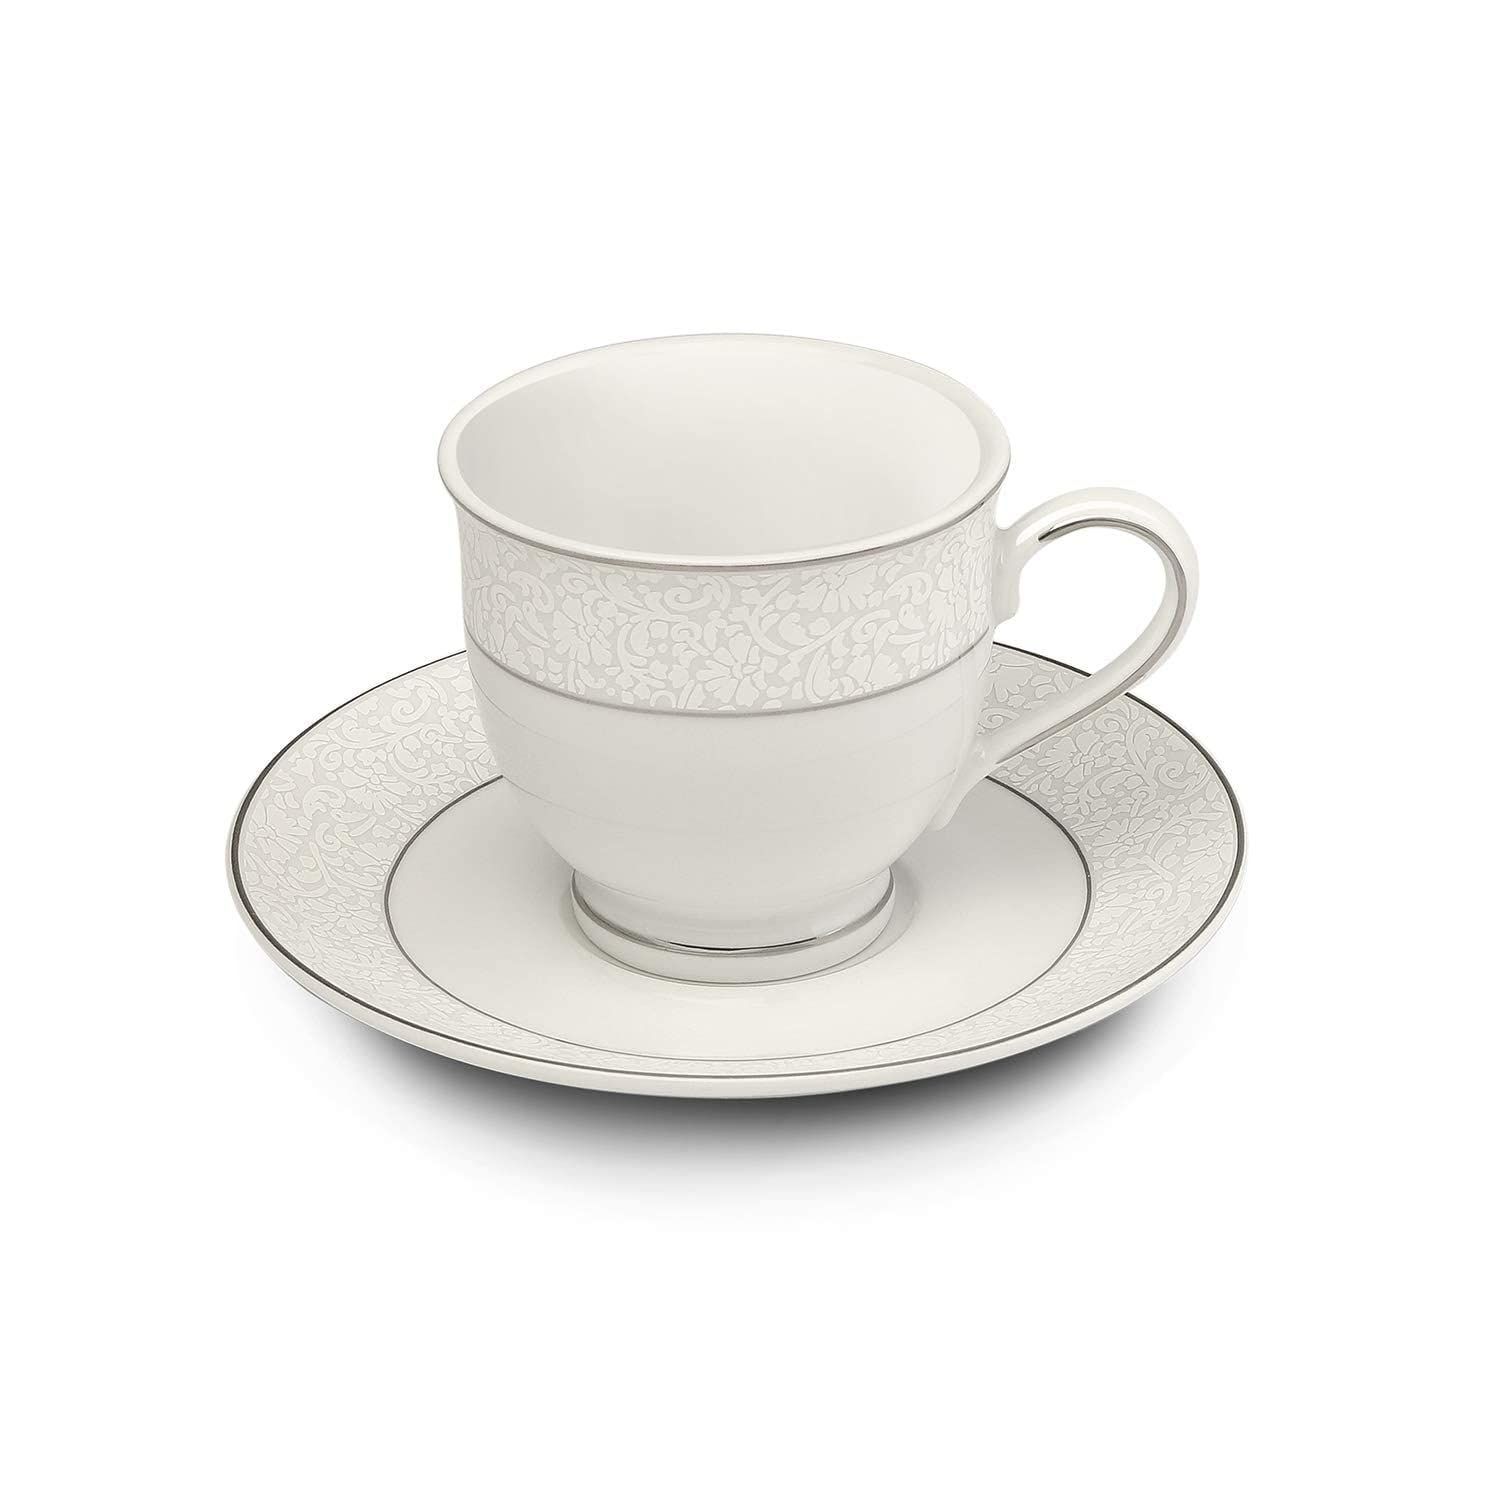 Hitkari Potteries - Cup & Saucer Set of 12pcs, Pair of 6 | for Morning & Evening Tea | Material: Porcelain | Elegant Design |12 -Pieces, White